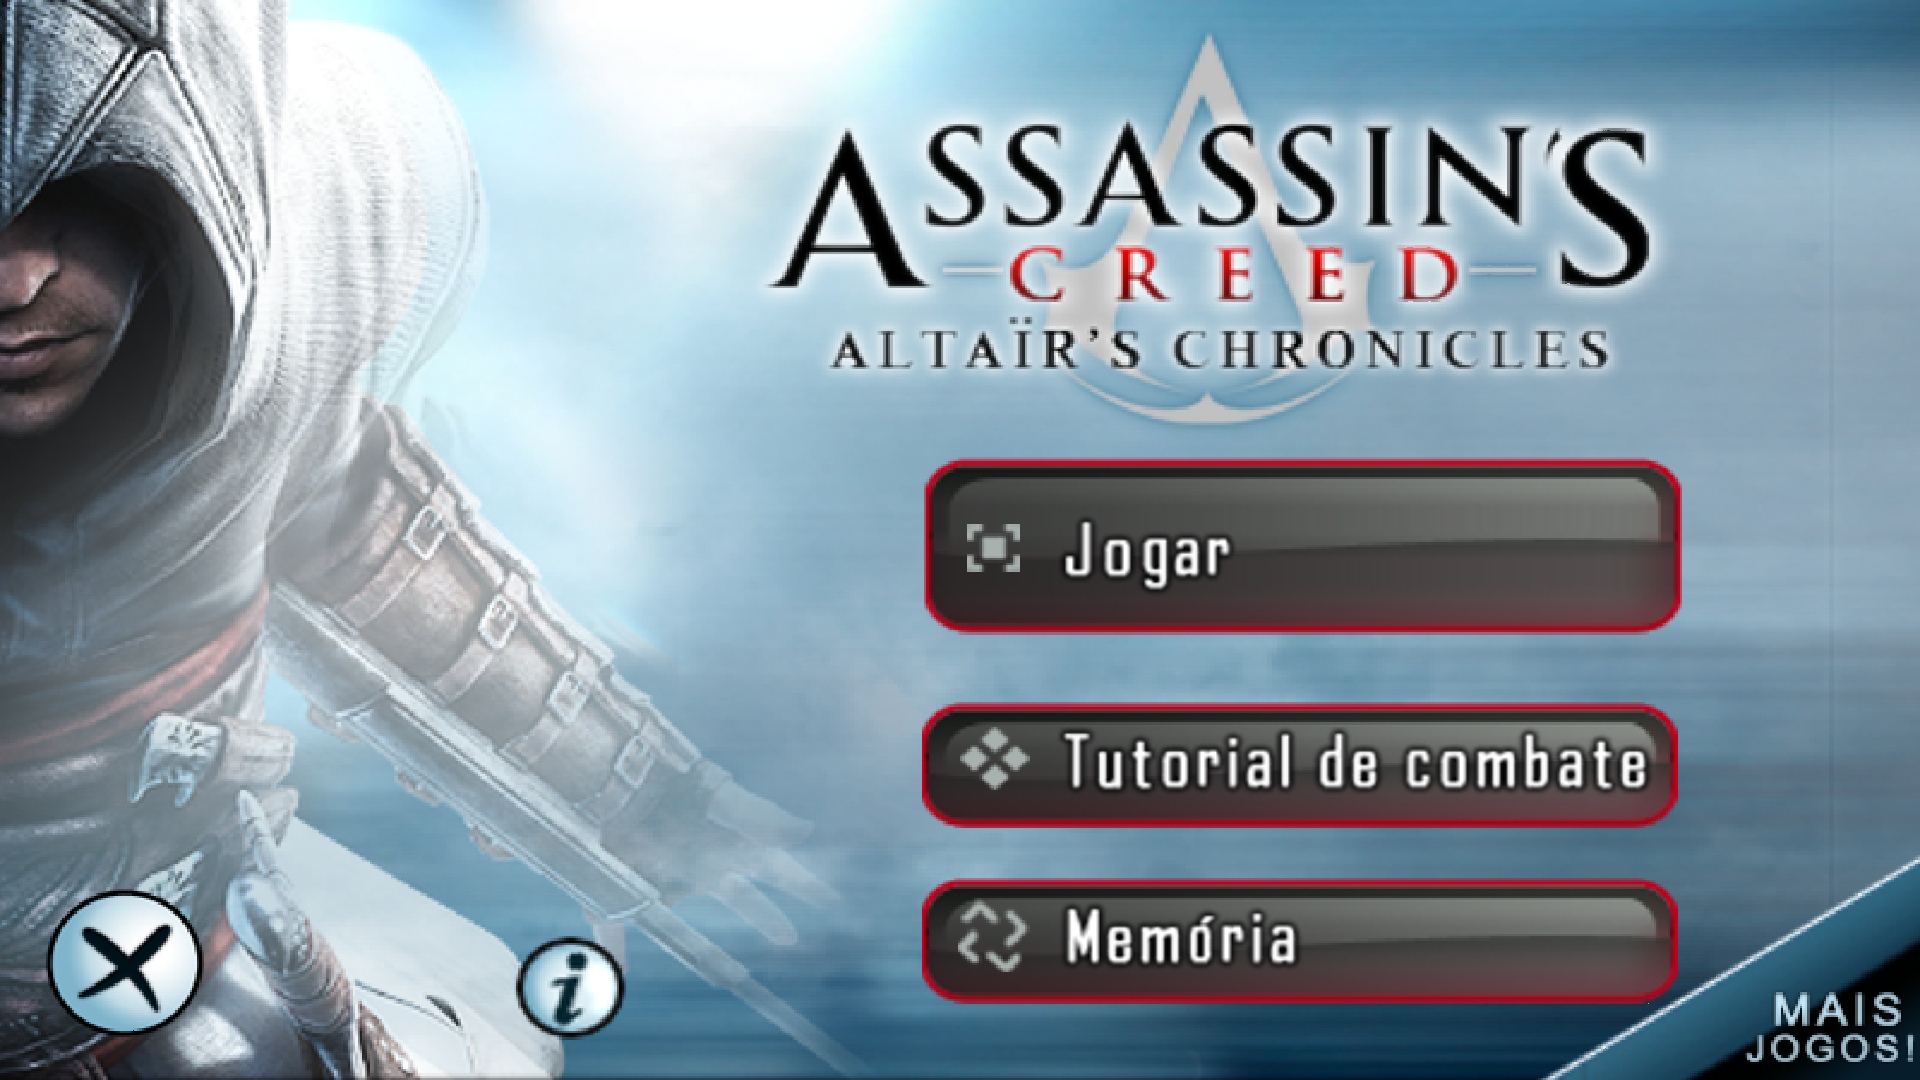 Assassins Creed 1.1.2-Android. Assassin игра на андроиде. Игра Assassin’s Creed II на андроид. Assassins Creed Altair Chronicles Nintendo DS. Ассасин на андроид встроенный кэш